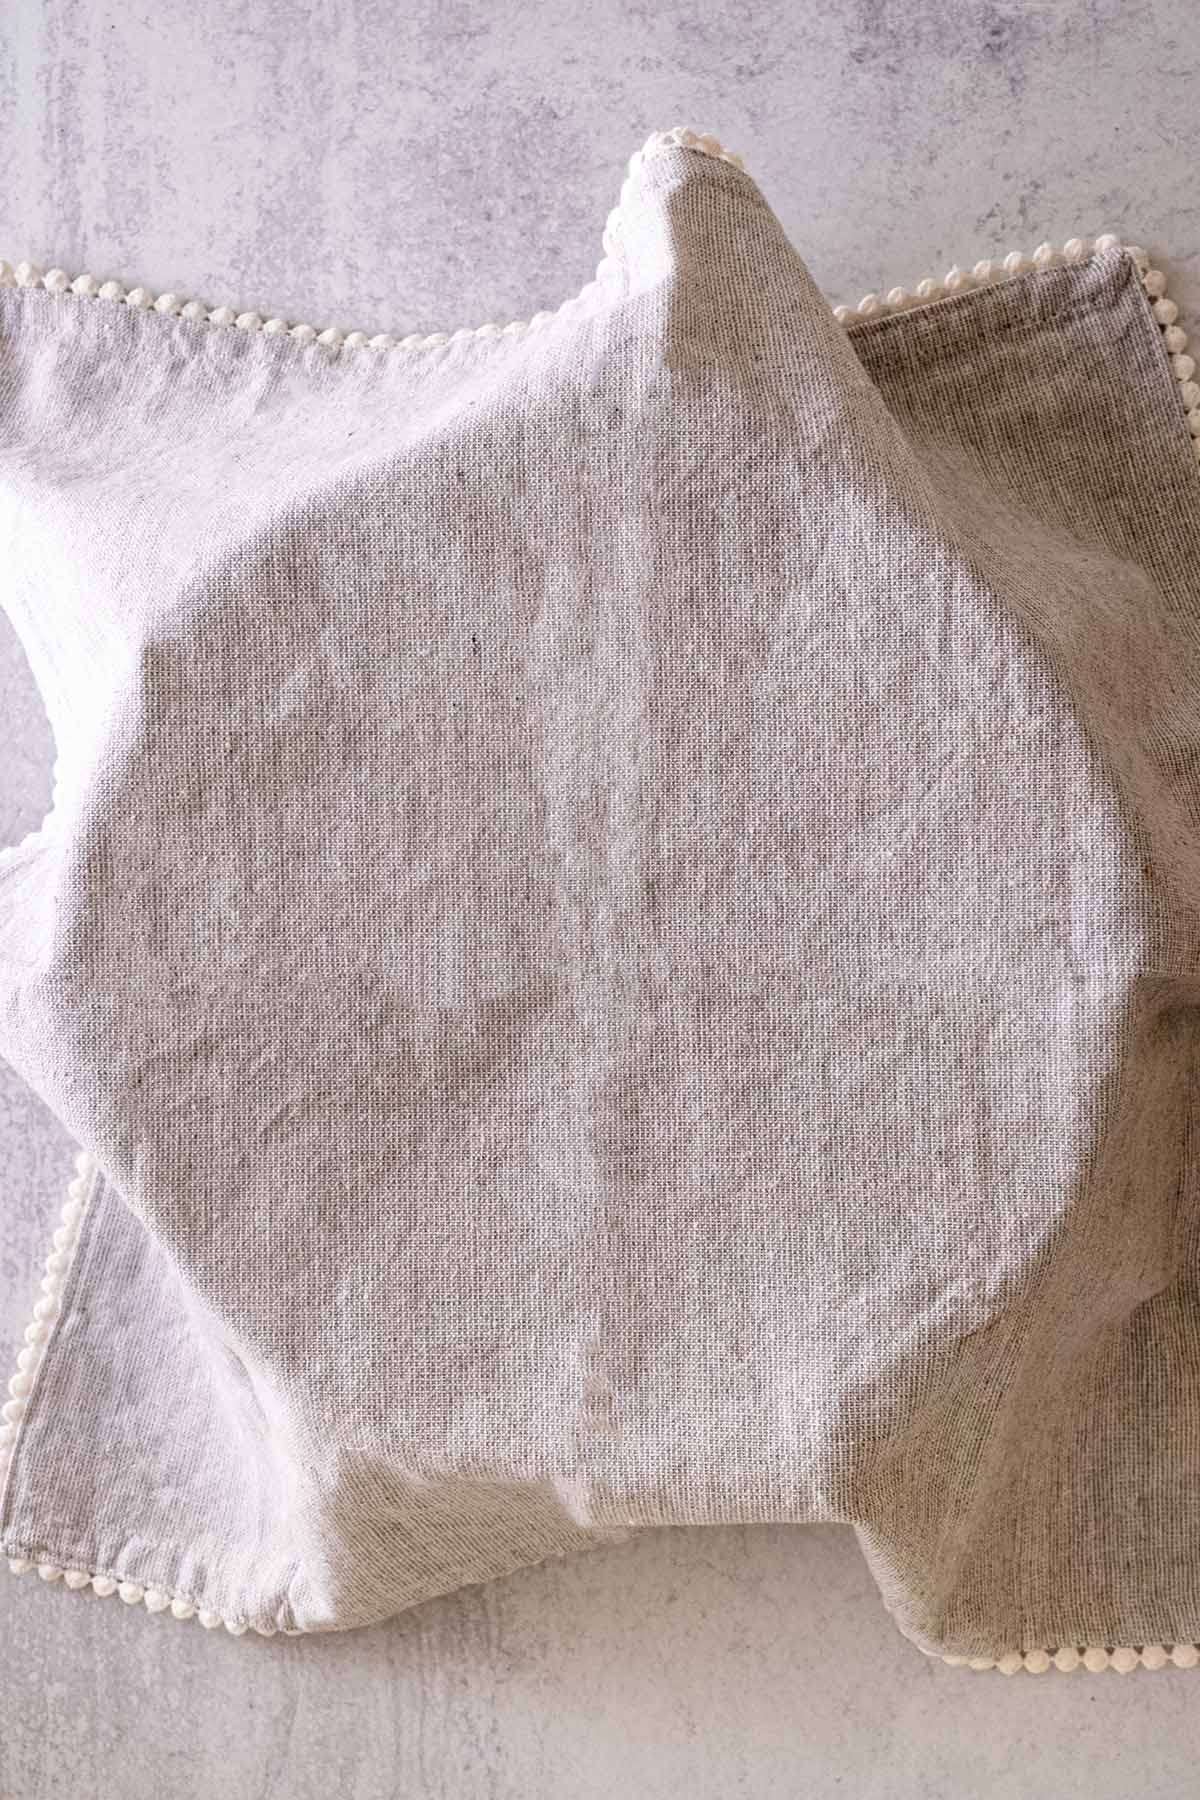 Dough covered with a light grey cloth napkin.